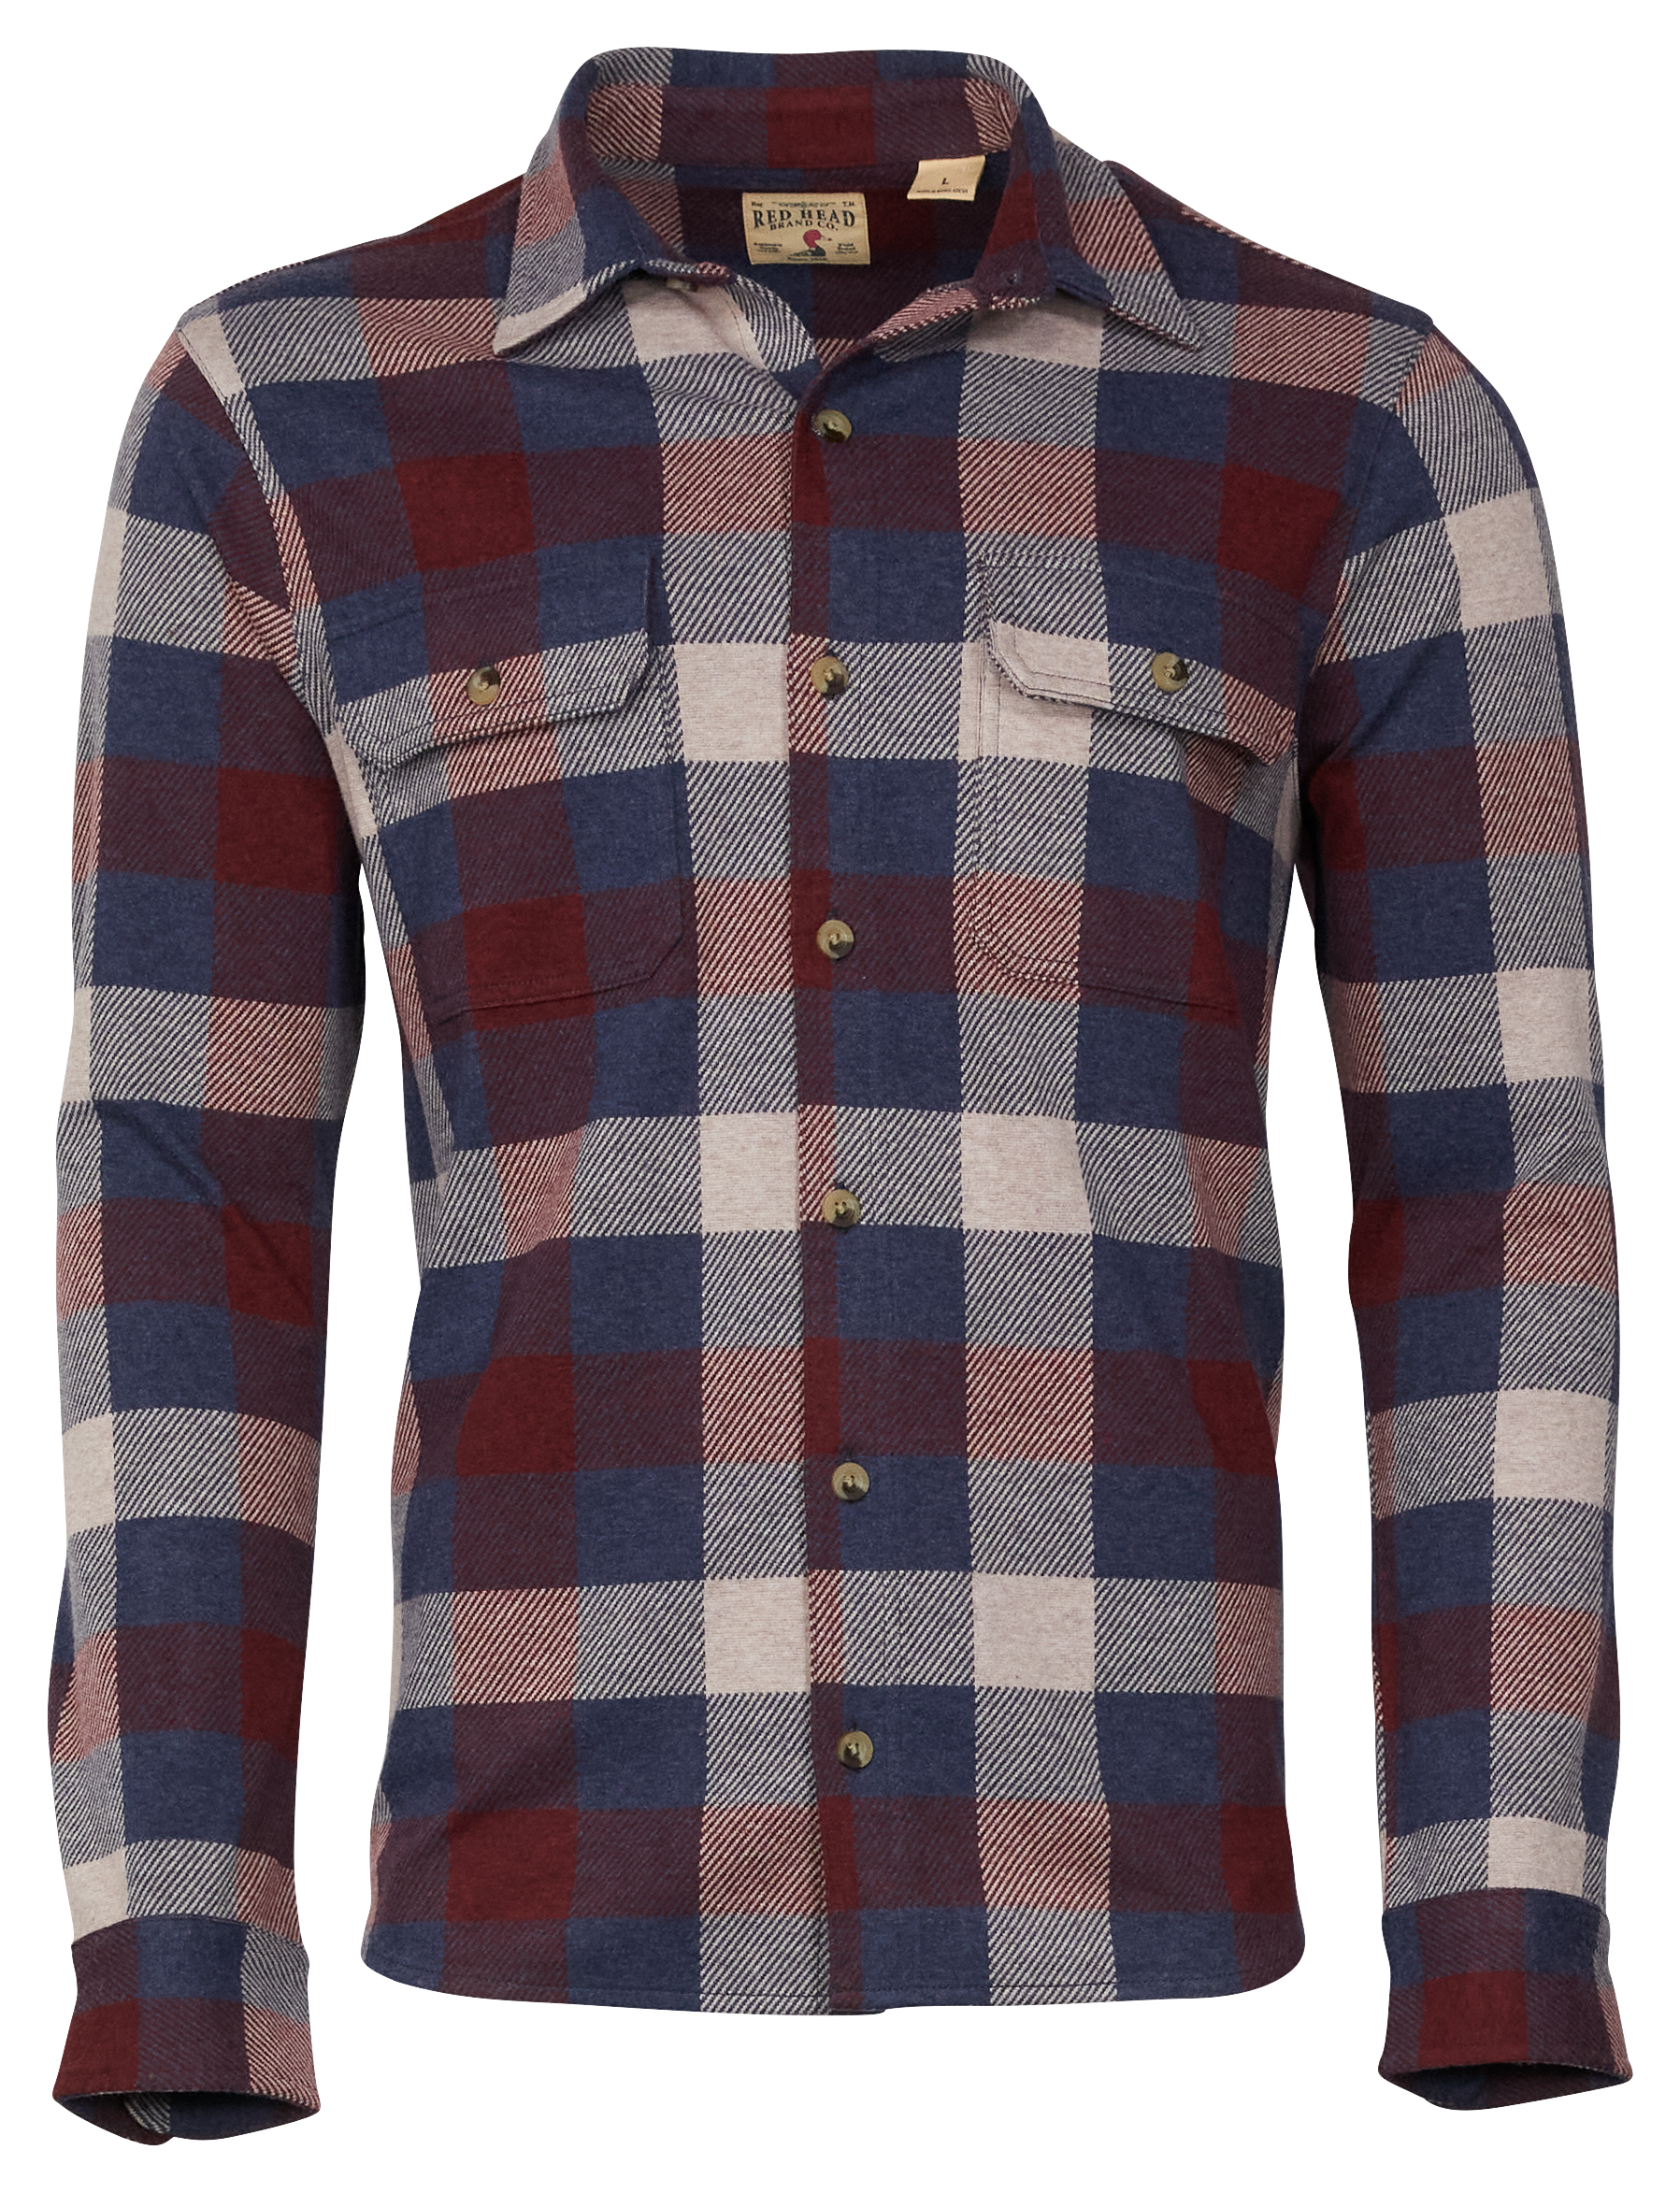 RedHead River Basin Knit Long-Sleeve Shirt for Men